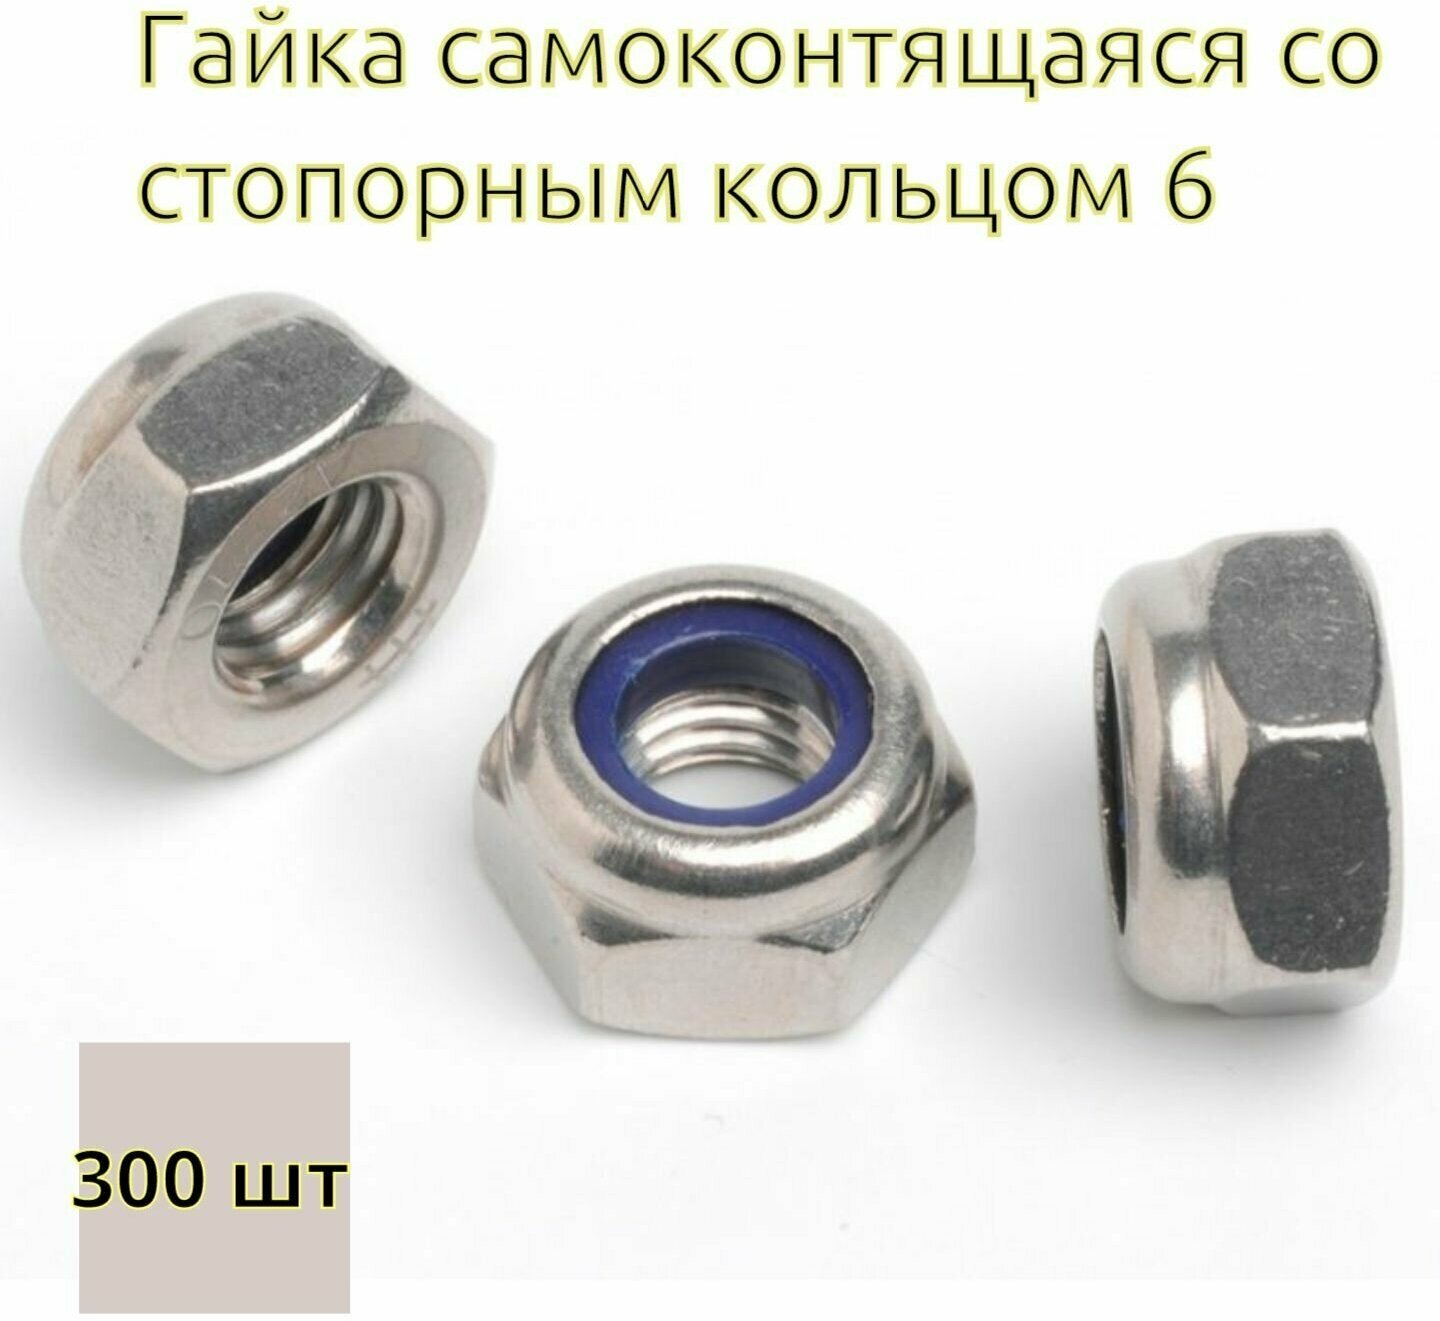 Гайка самоконтрящаяся со стопорным кольцом М6 цинк (DIN 985) - 300 шт